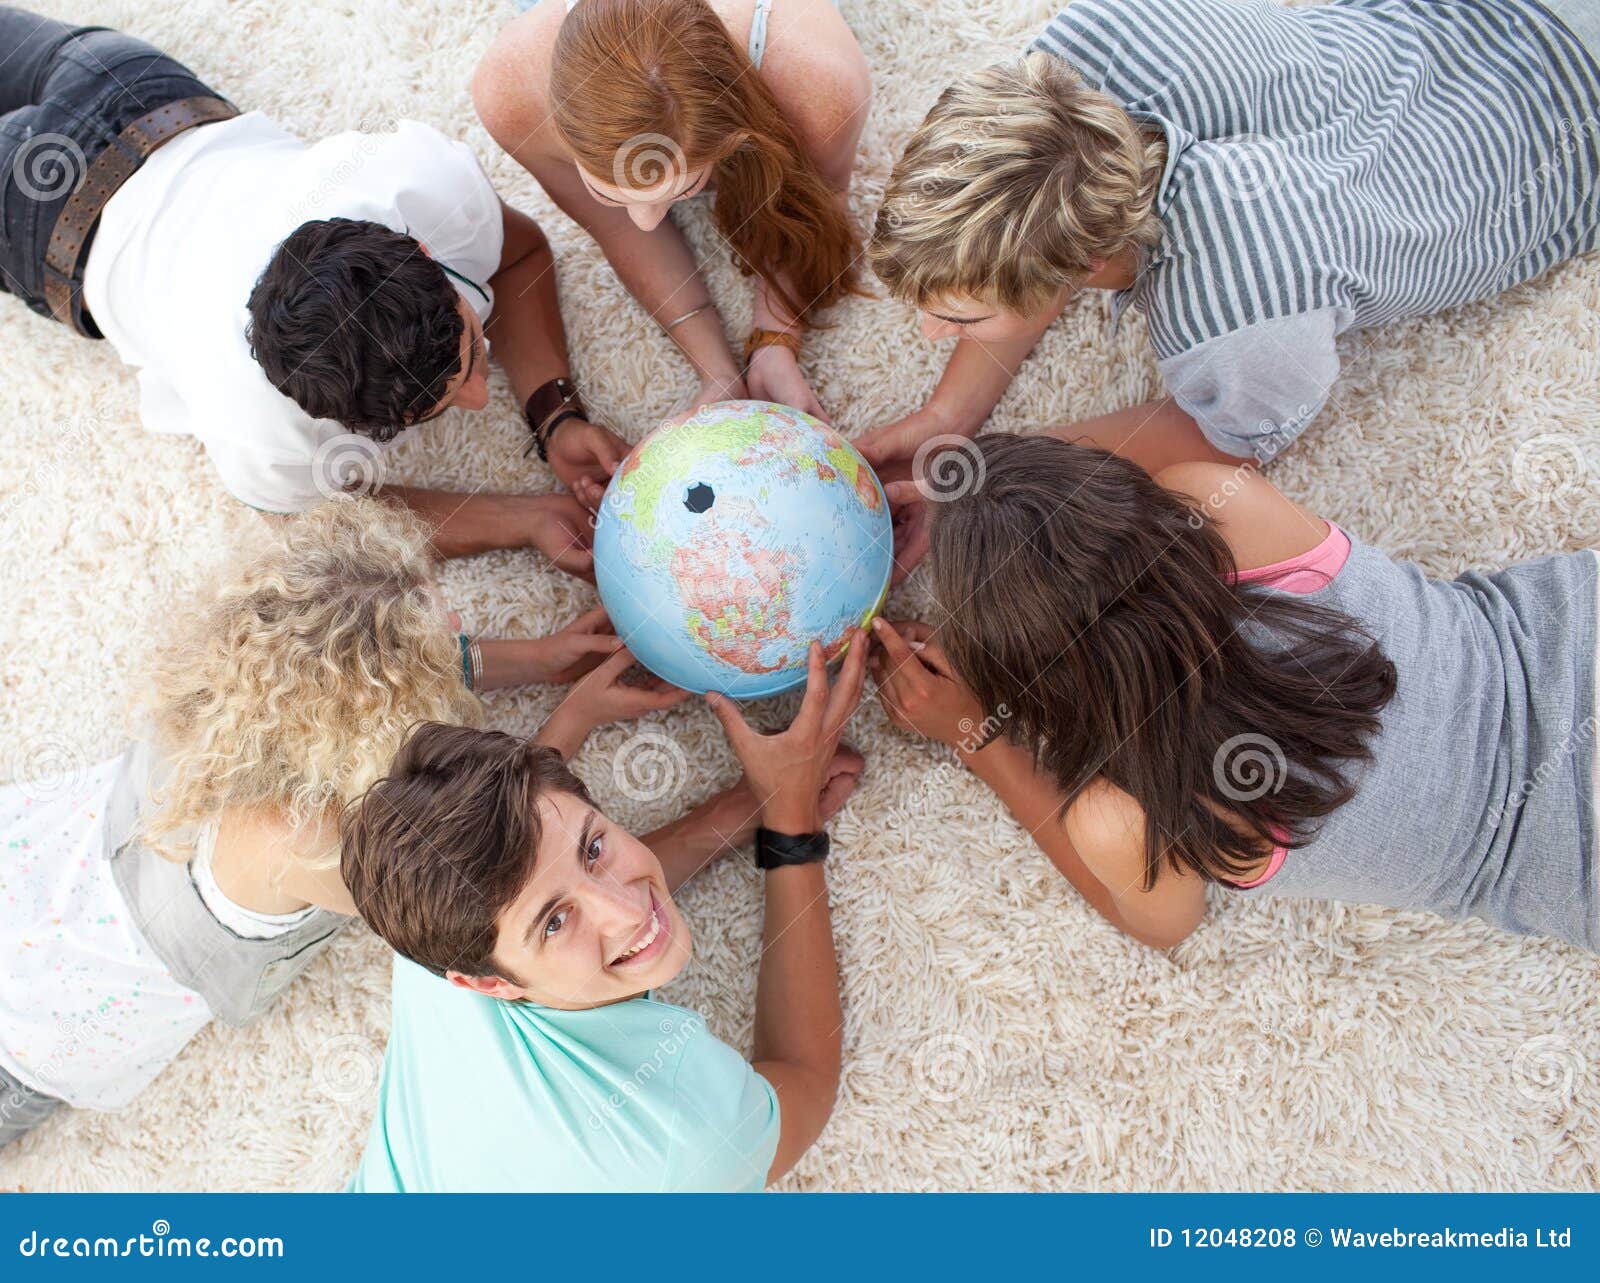 teenagers examining a terrestrial globe